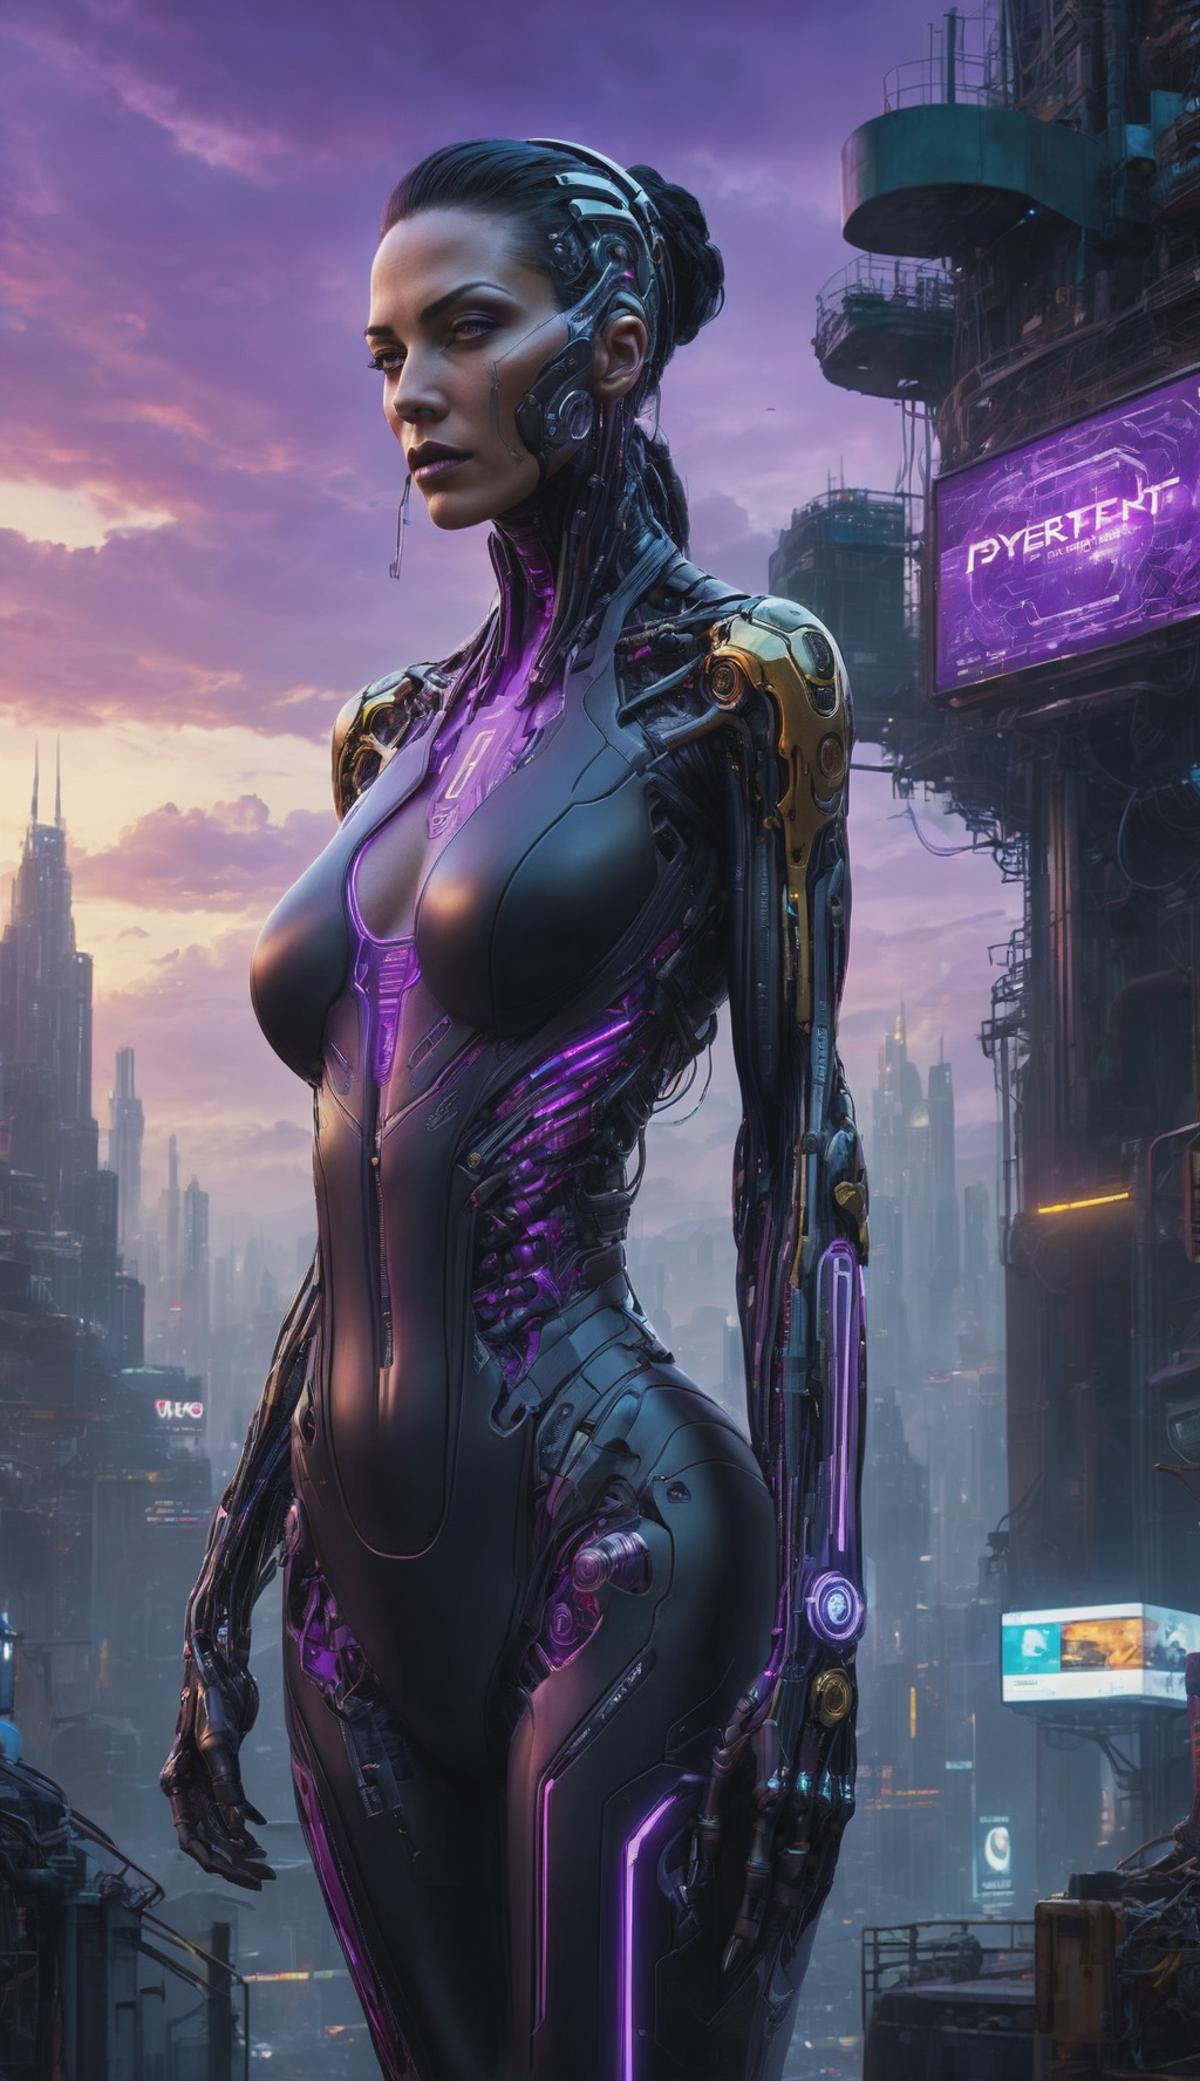 A futuristic cyborg woman wearing purple and black in a cityscape.